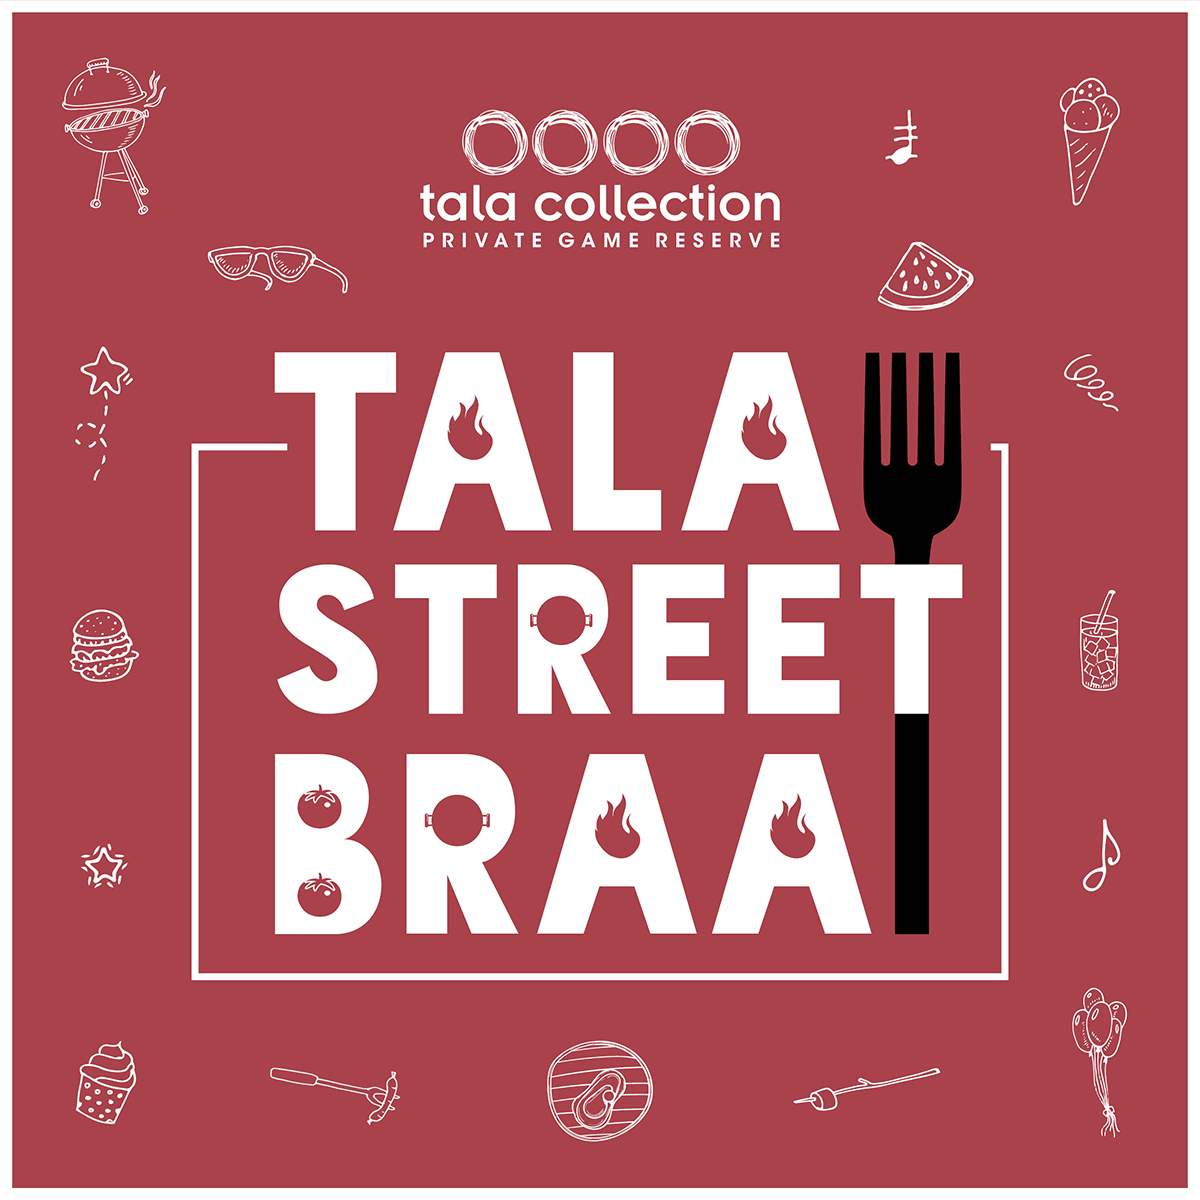 Tala Collection Game Reserve street braai